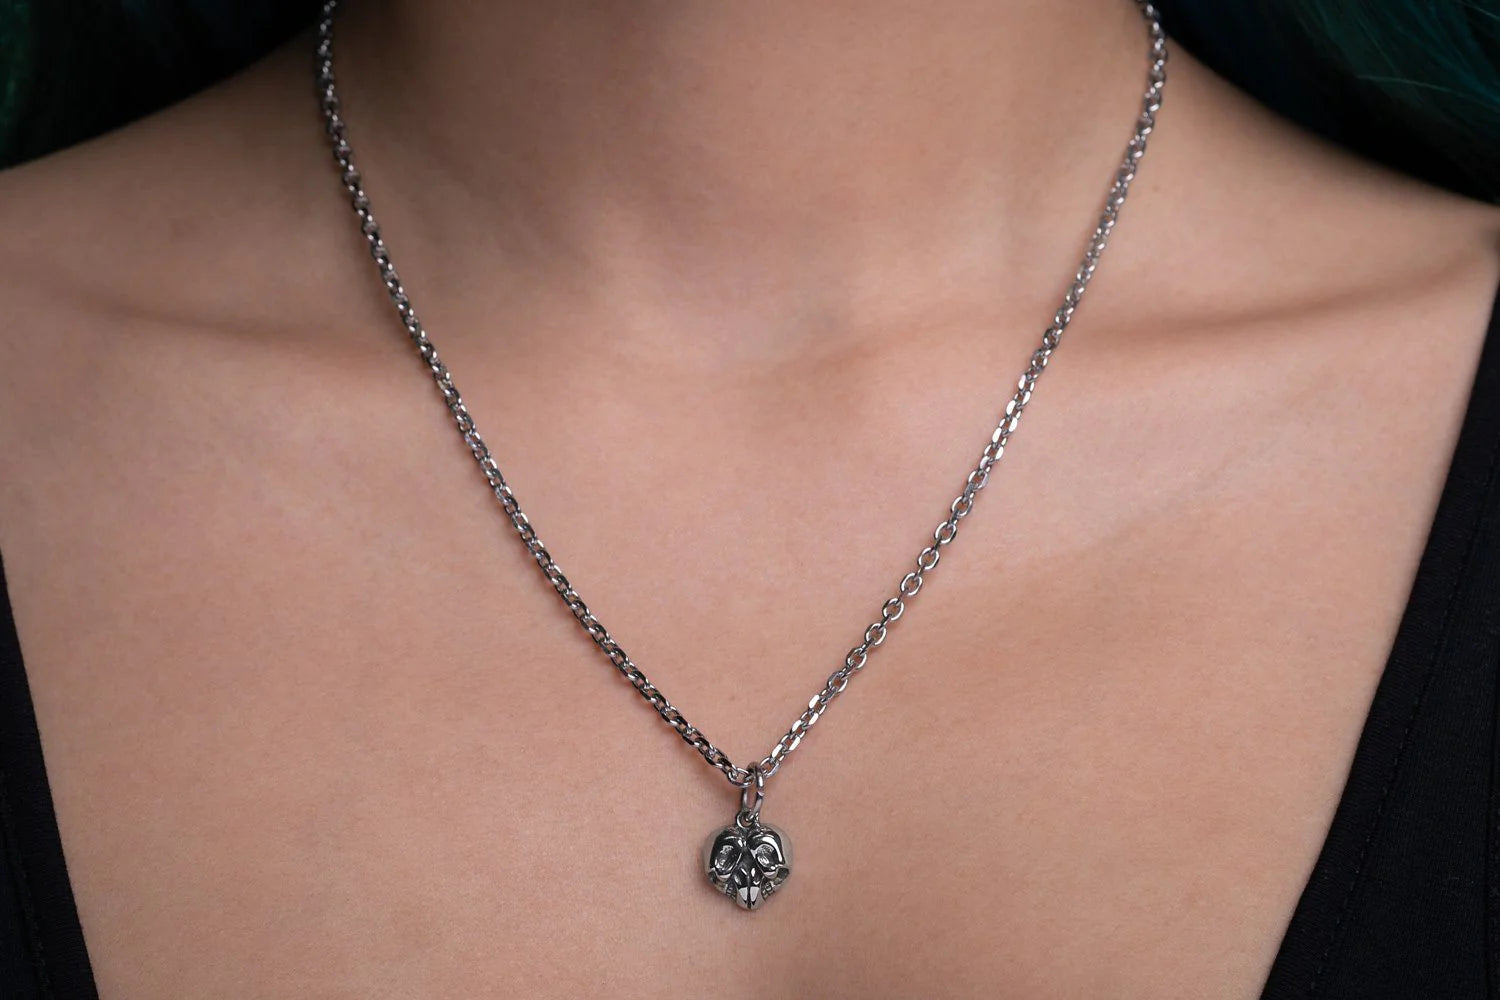 Is heart-shaped jewelry fashionable